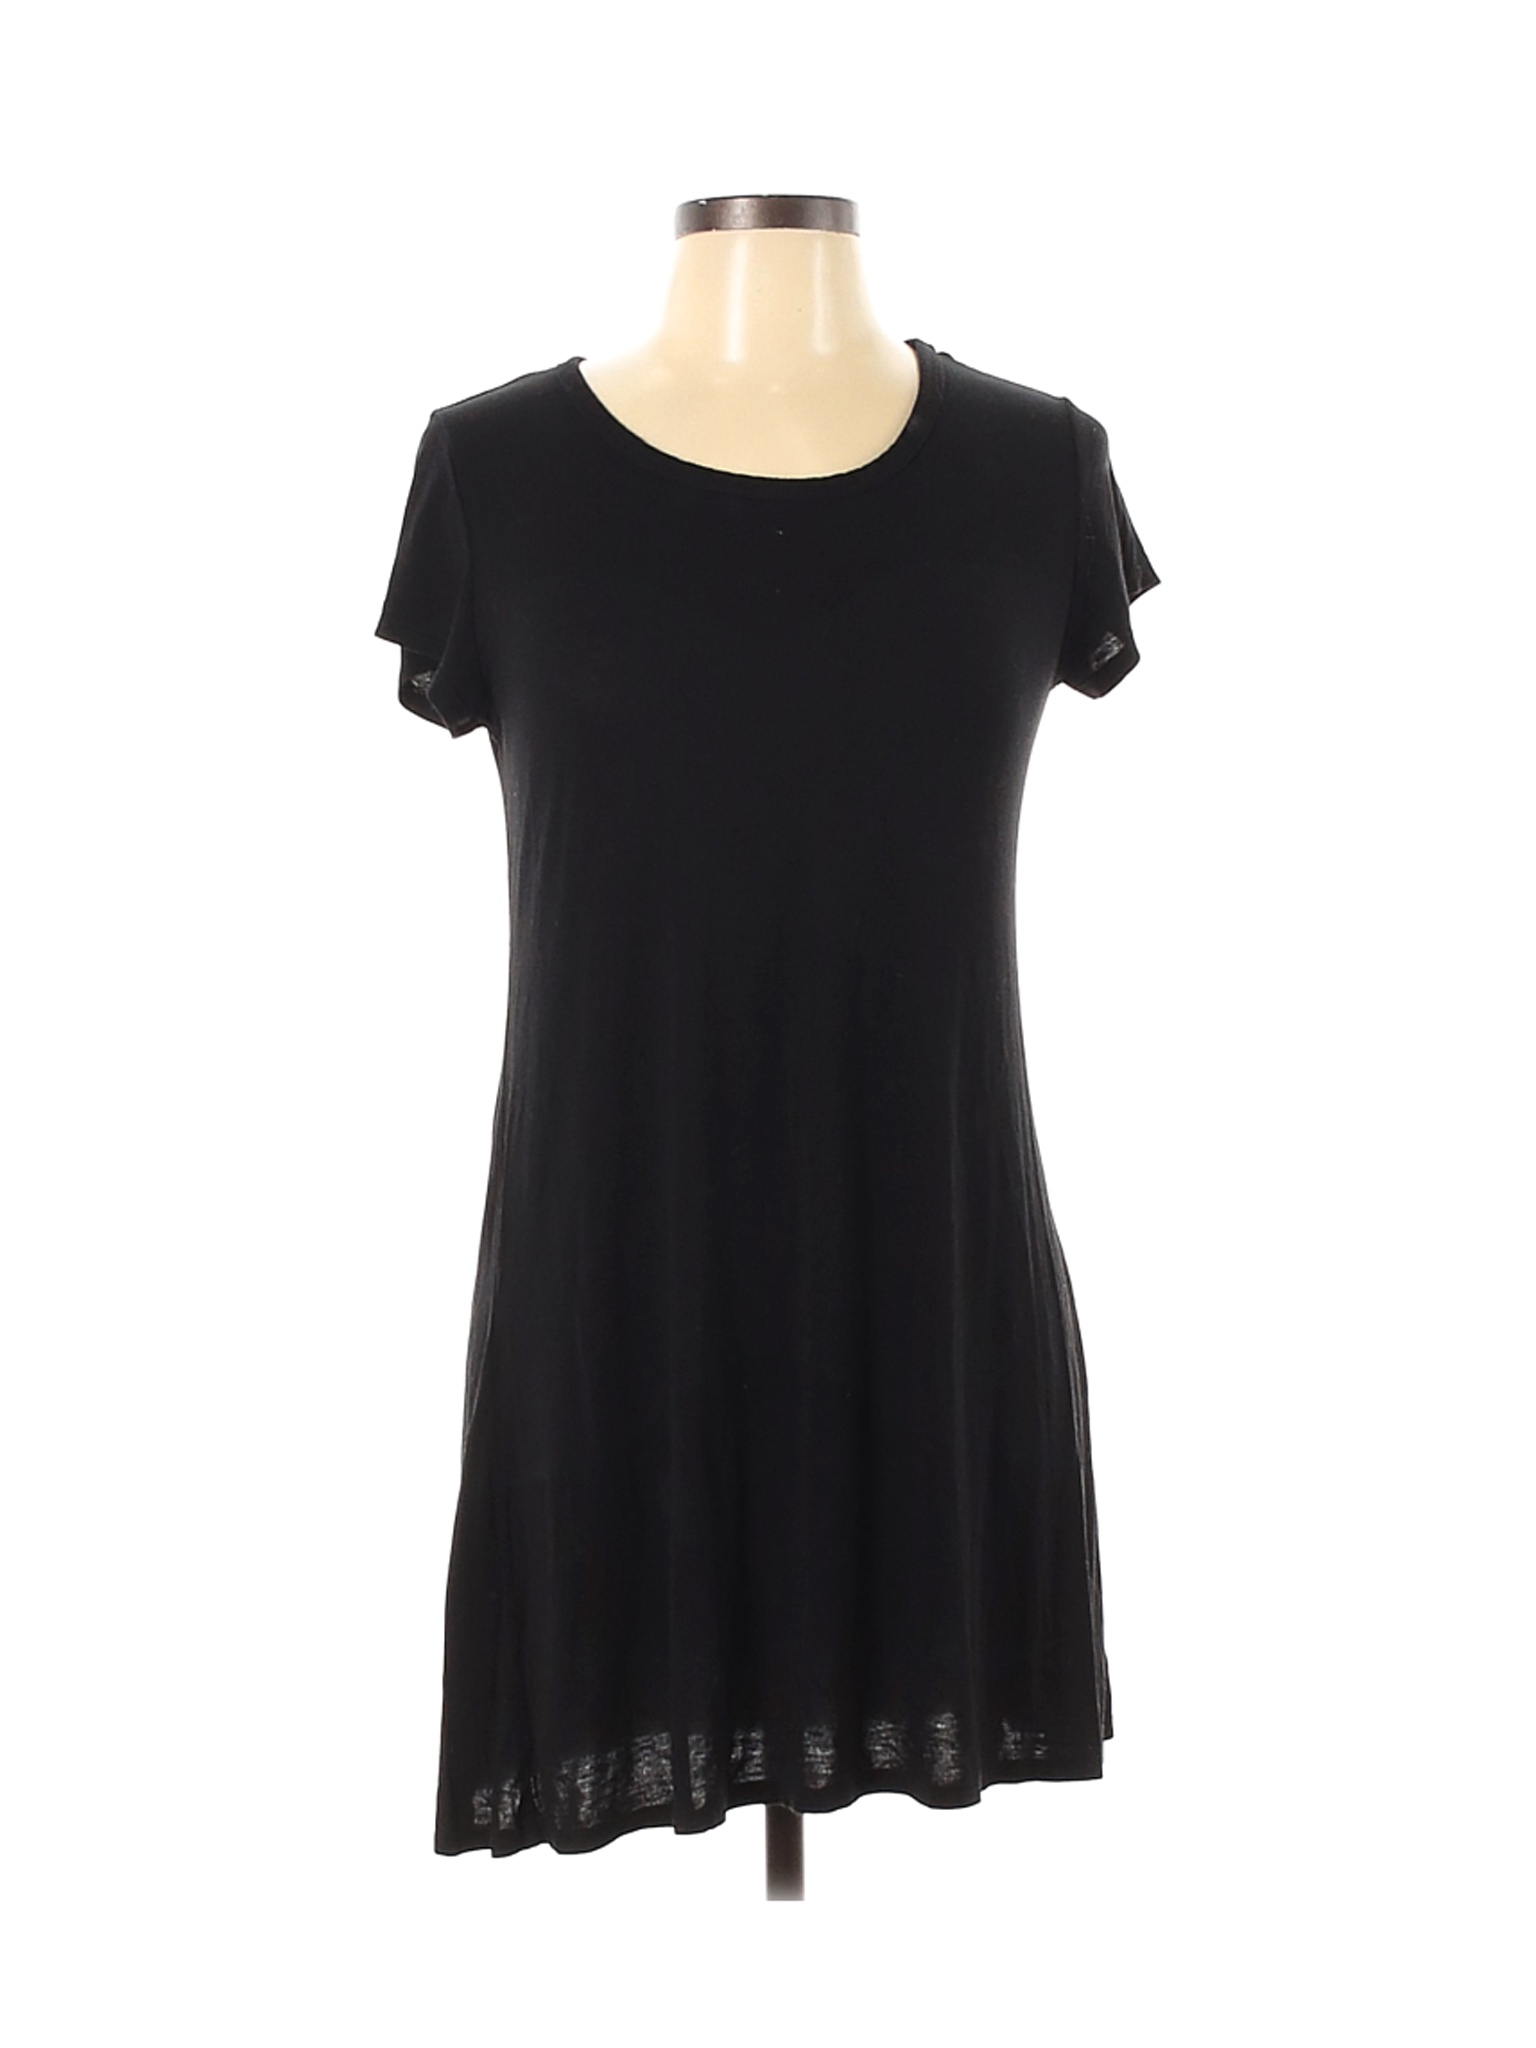 Olivia Rae Women Black Casual Dress L | eBay